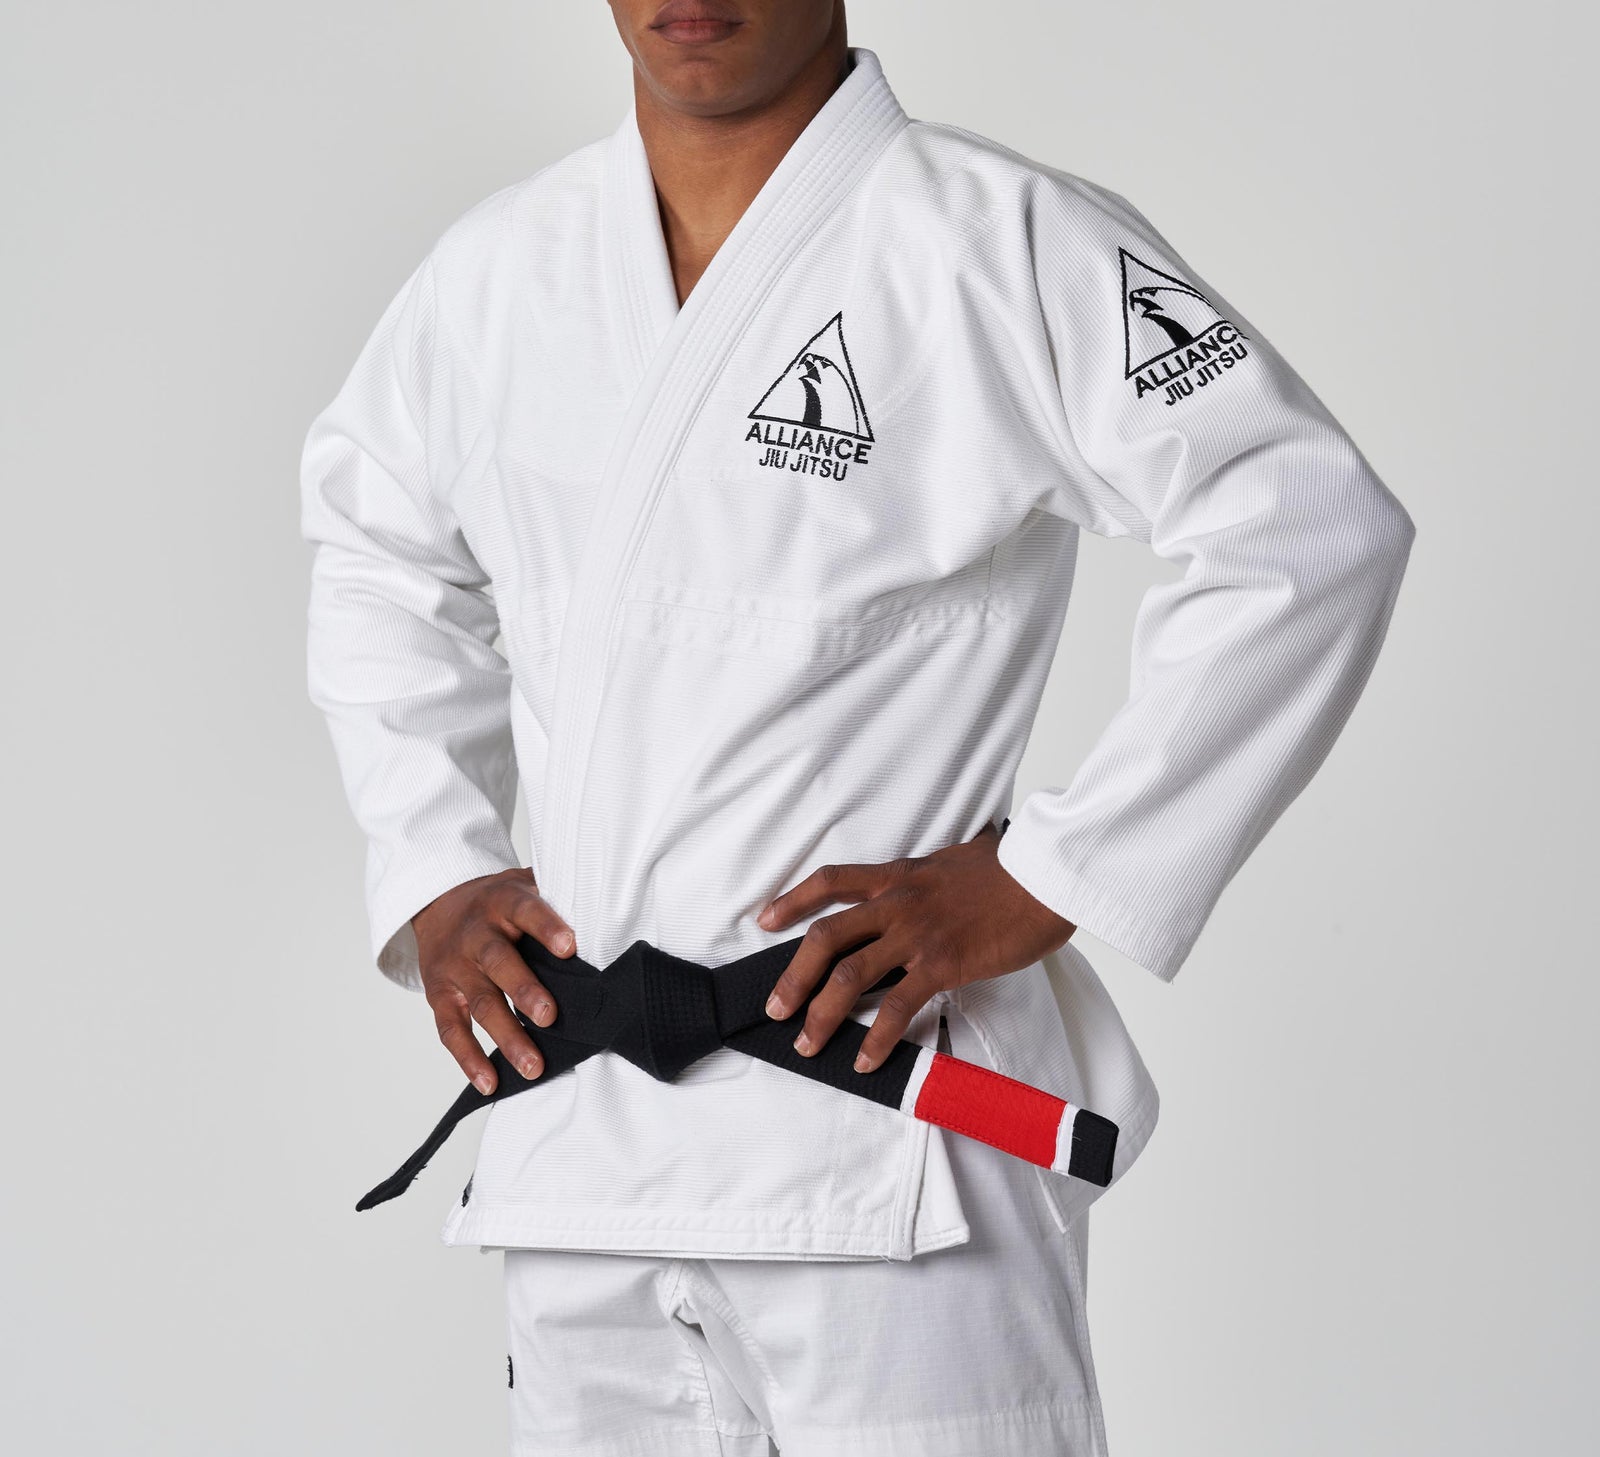 Alliance Pro Training Jiu Jitsu Gi - A00 / White